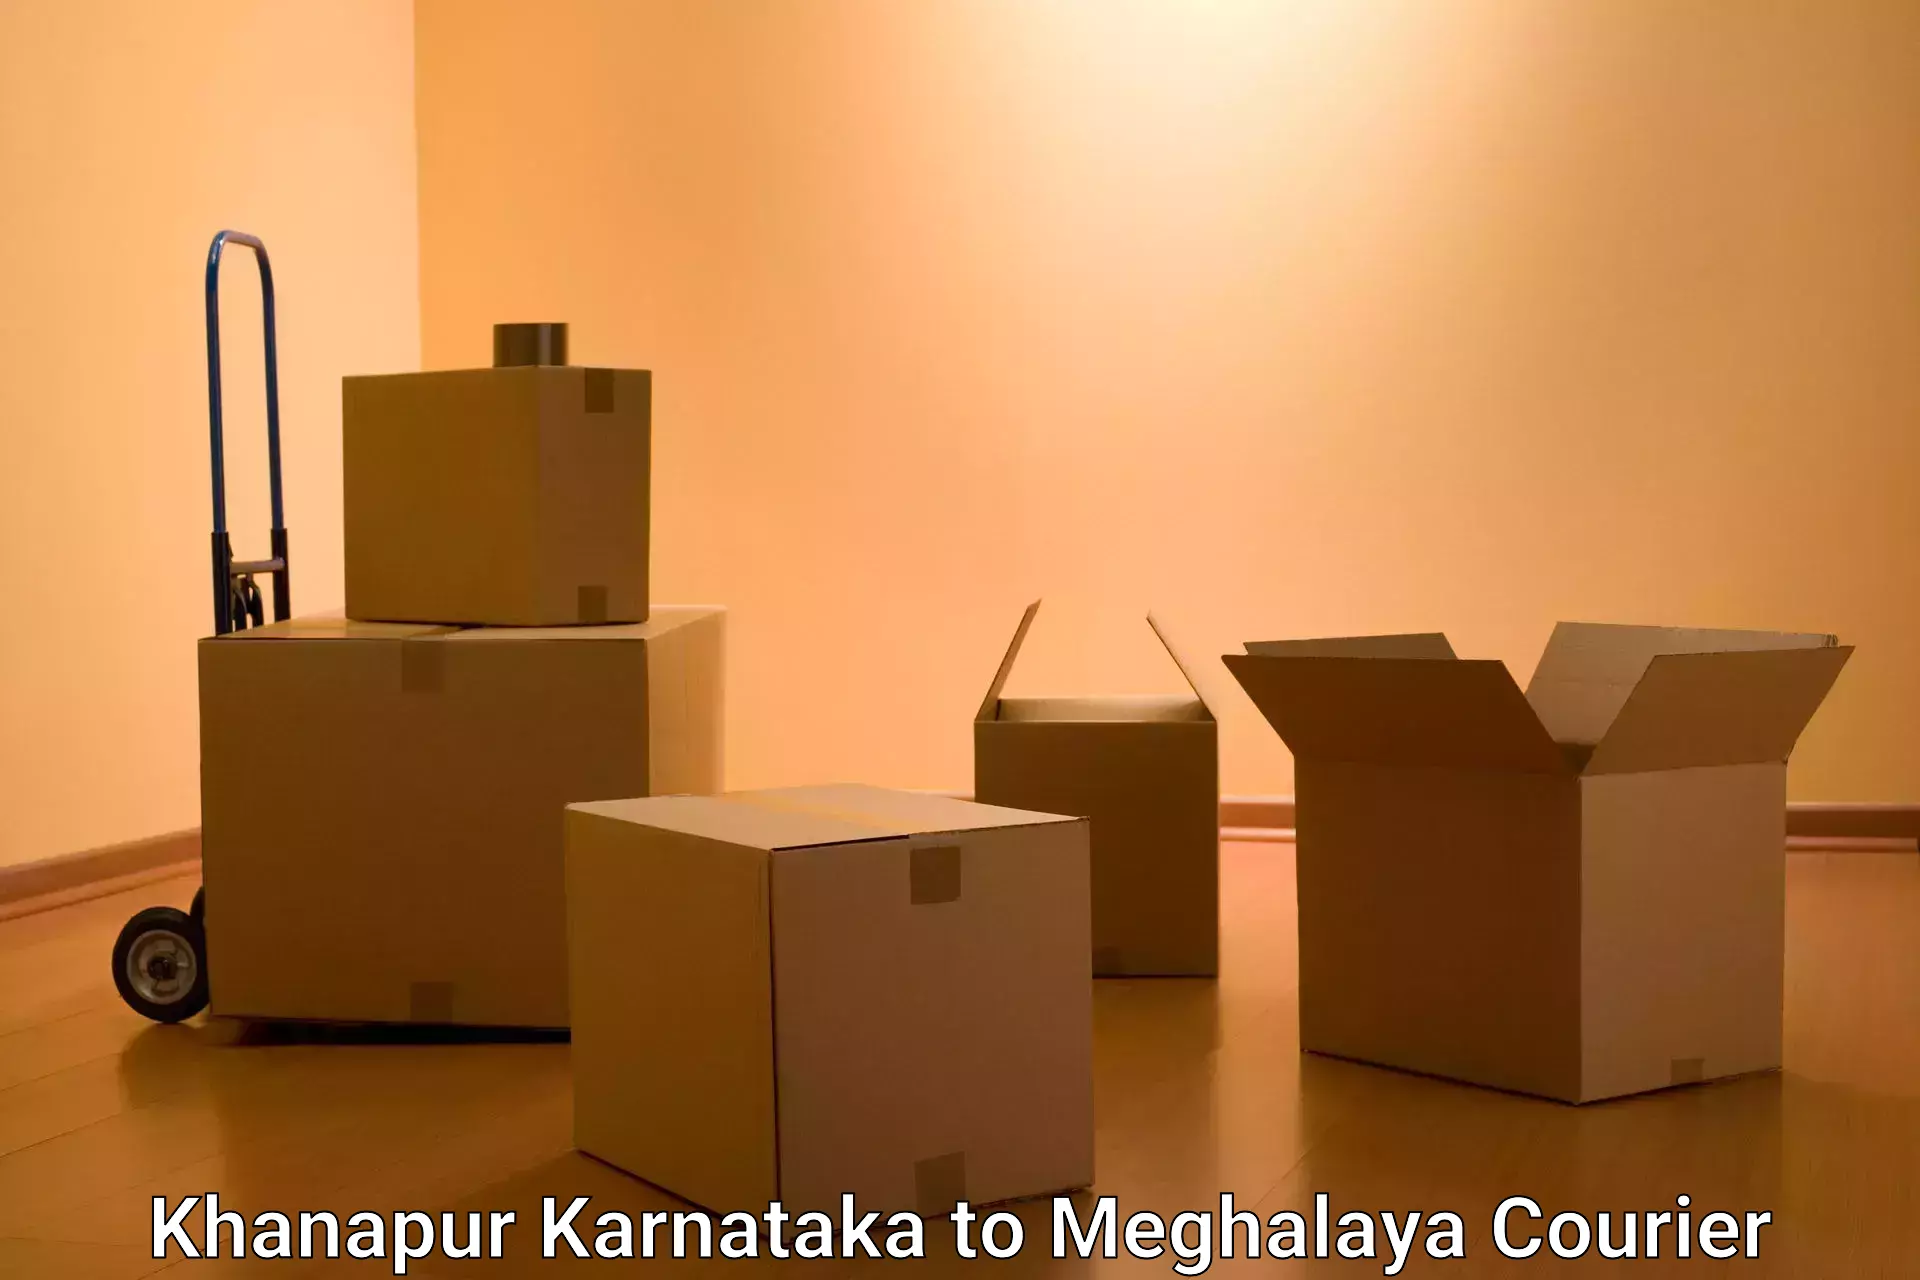 Ocean freight courier Khanapur Karnataka to Meghalaya